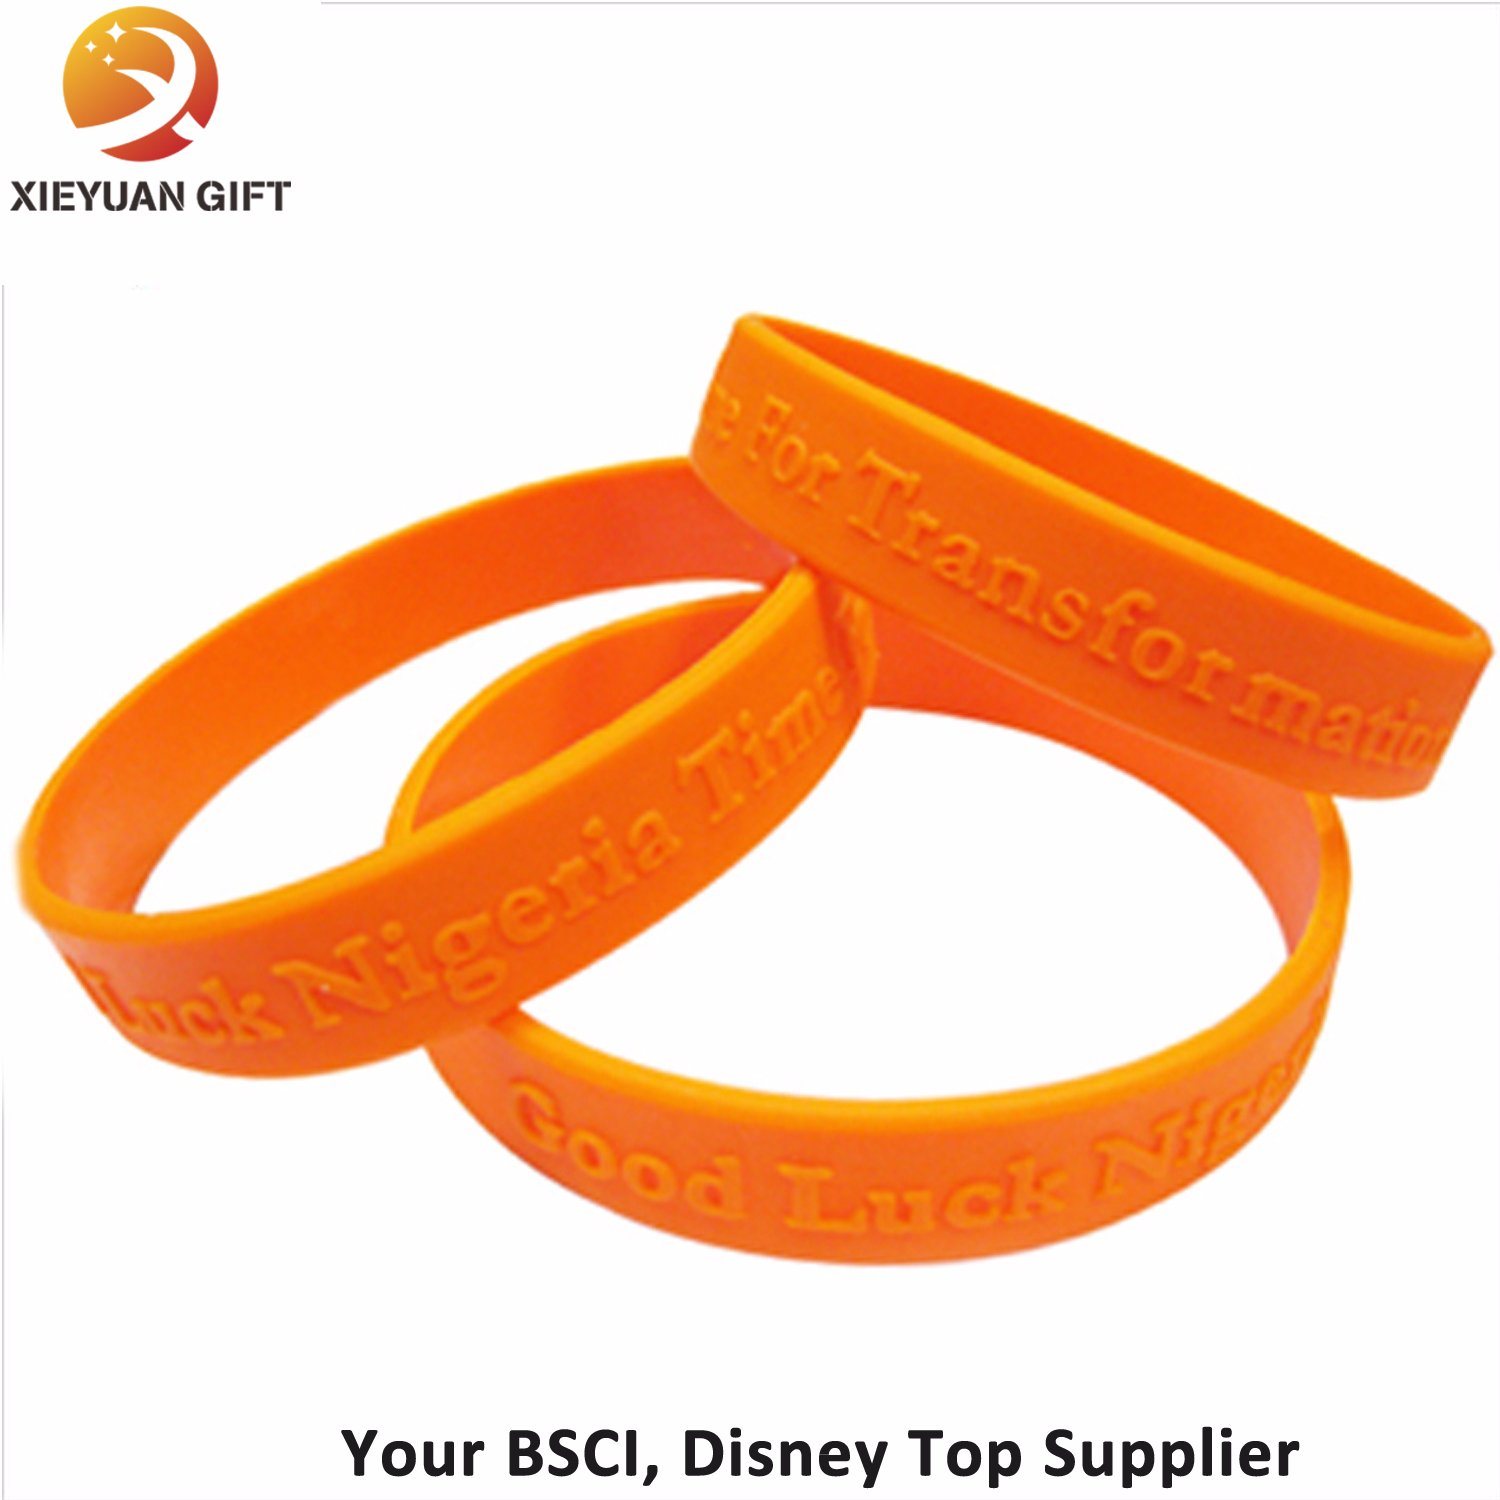 Custom Silicone Wristbands Orange Color Made in China